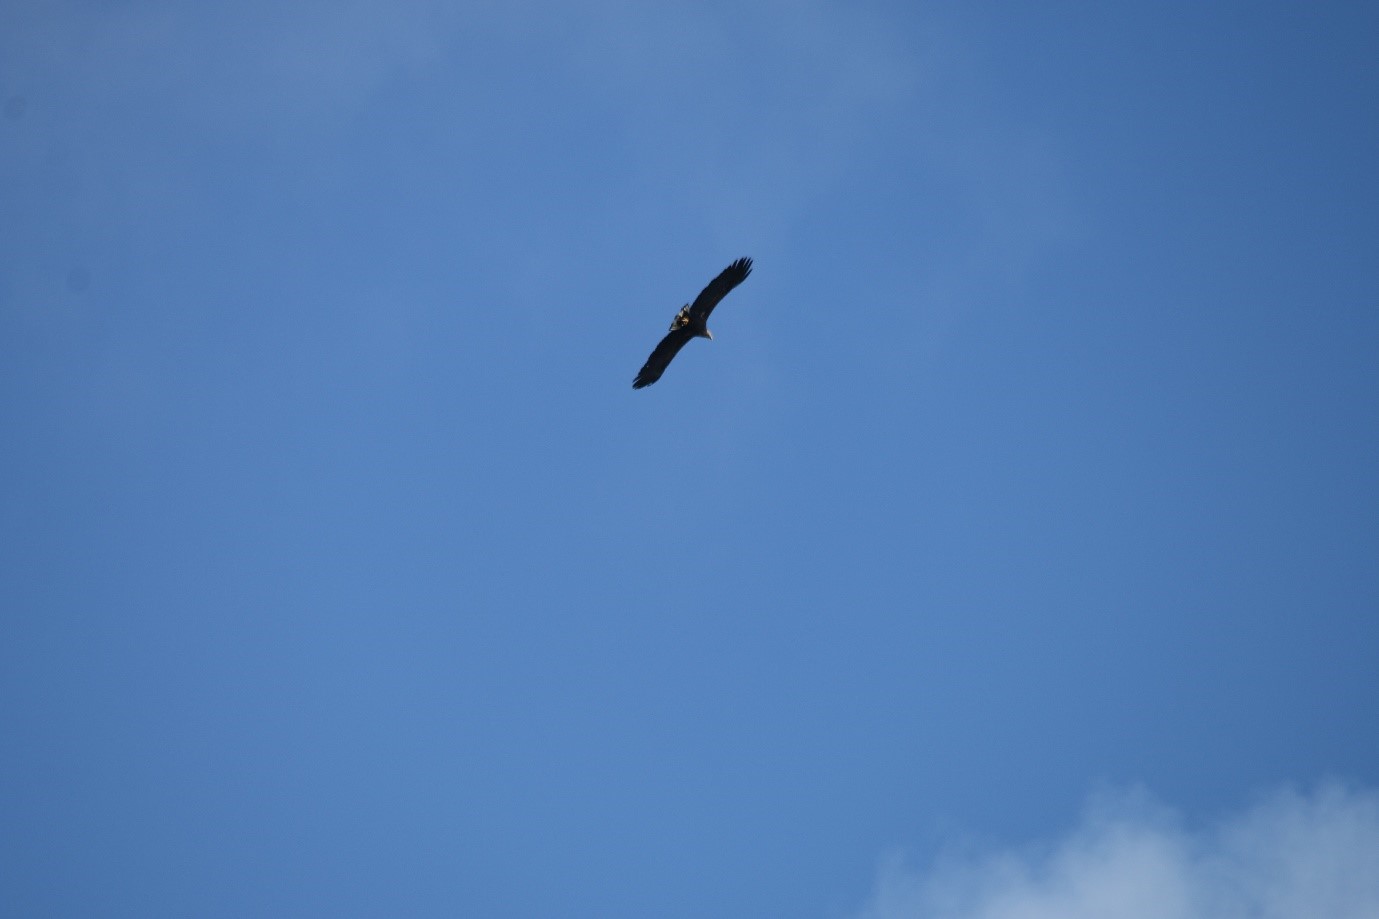 A soaring eagle against the blue sky